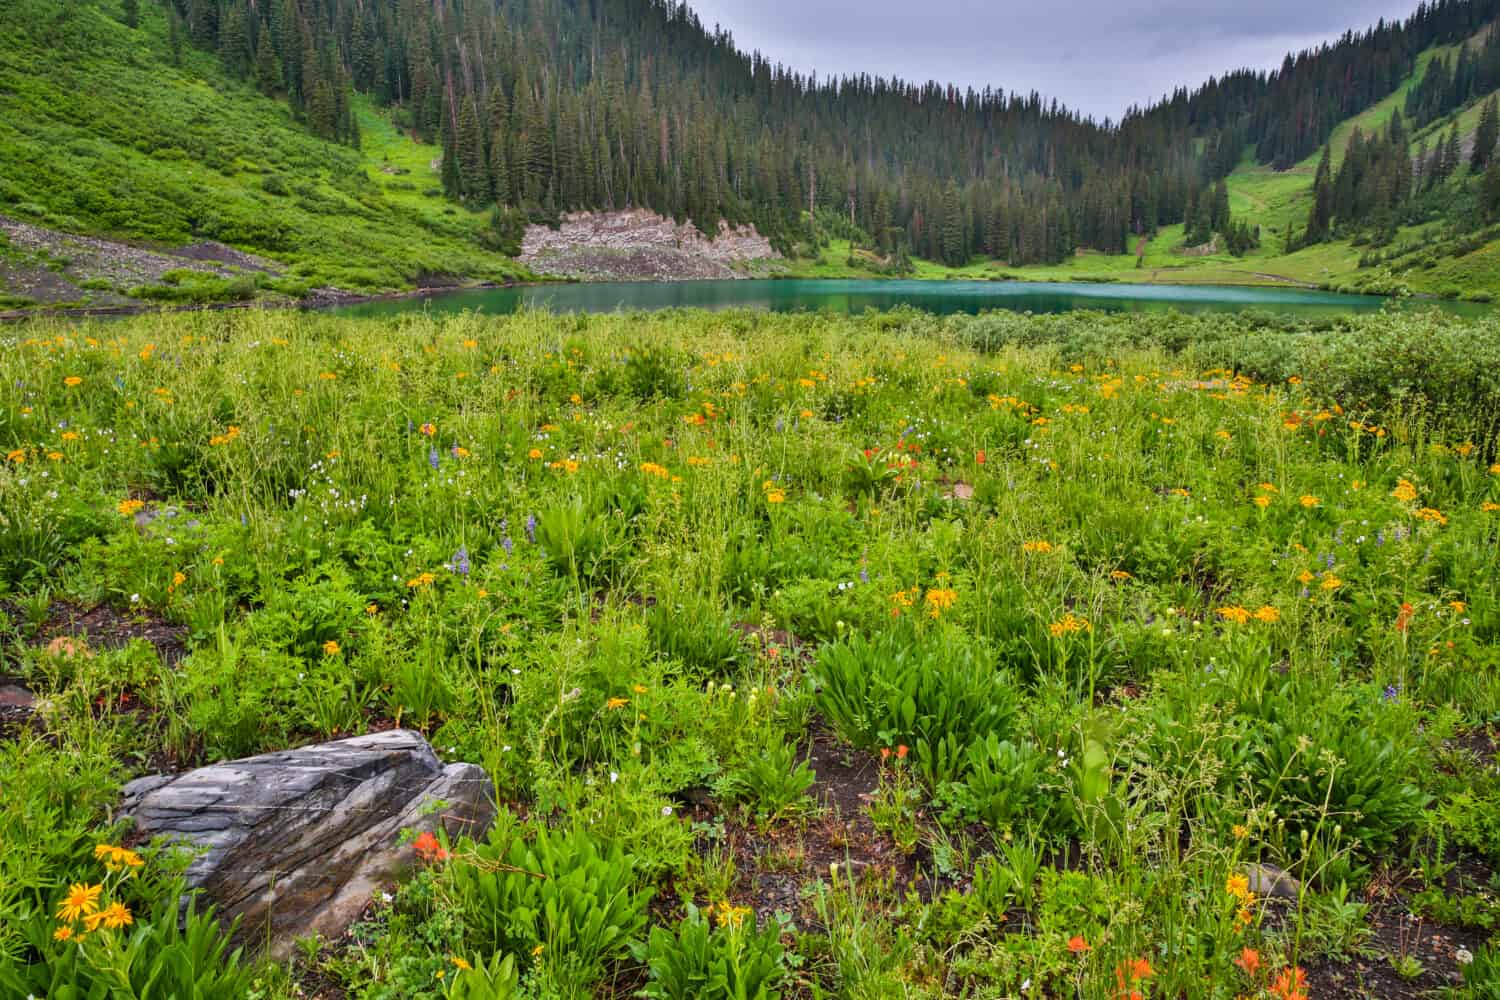 Field of alpine wildflowers in front of Emerald Lake